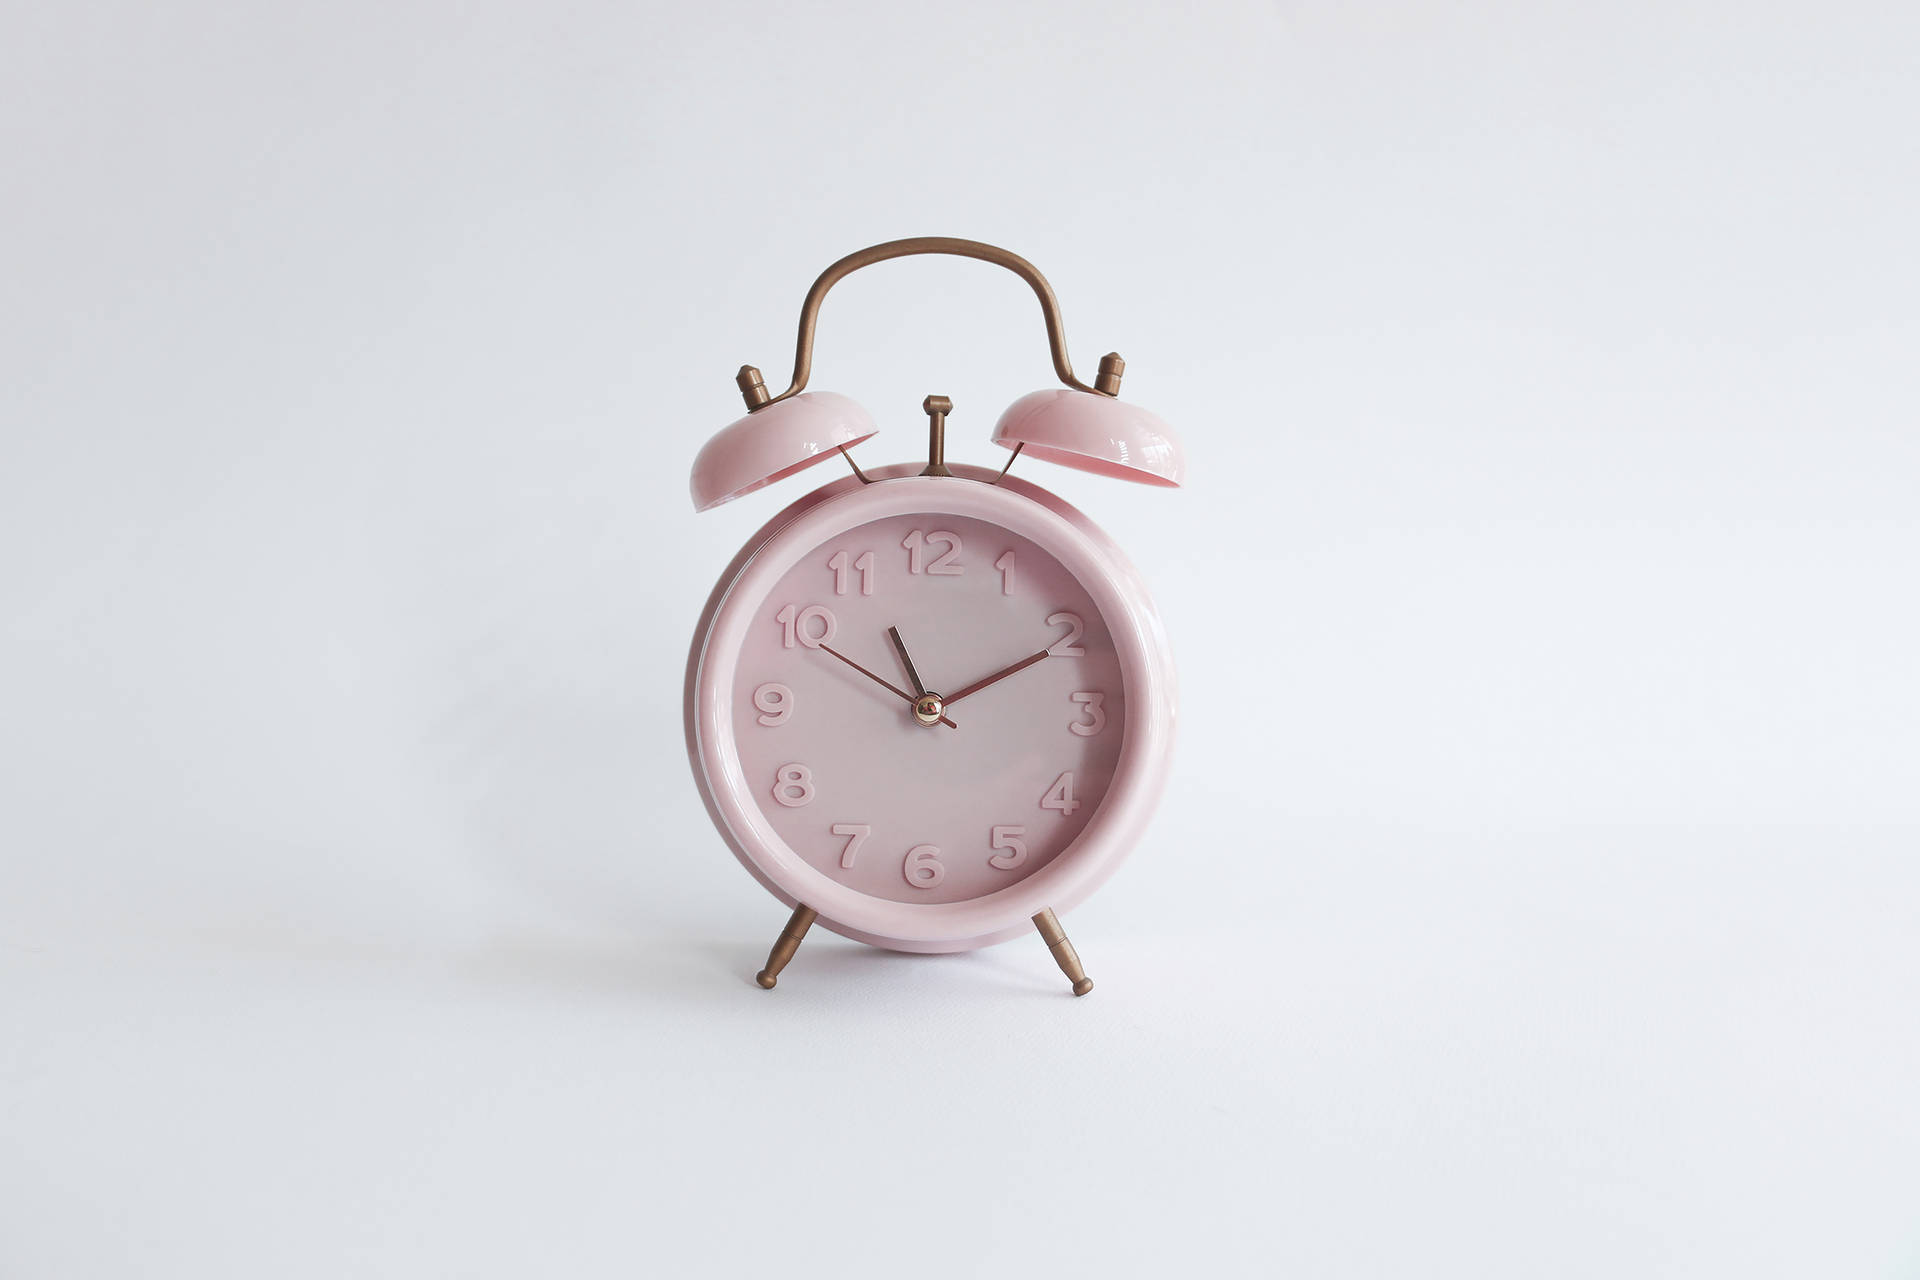 Girly Pink Aesthetic Alarm Clock Background